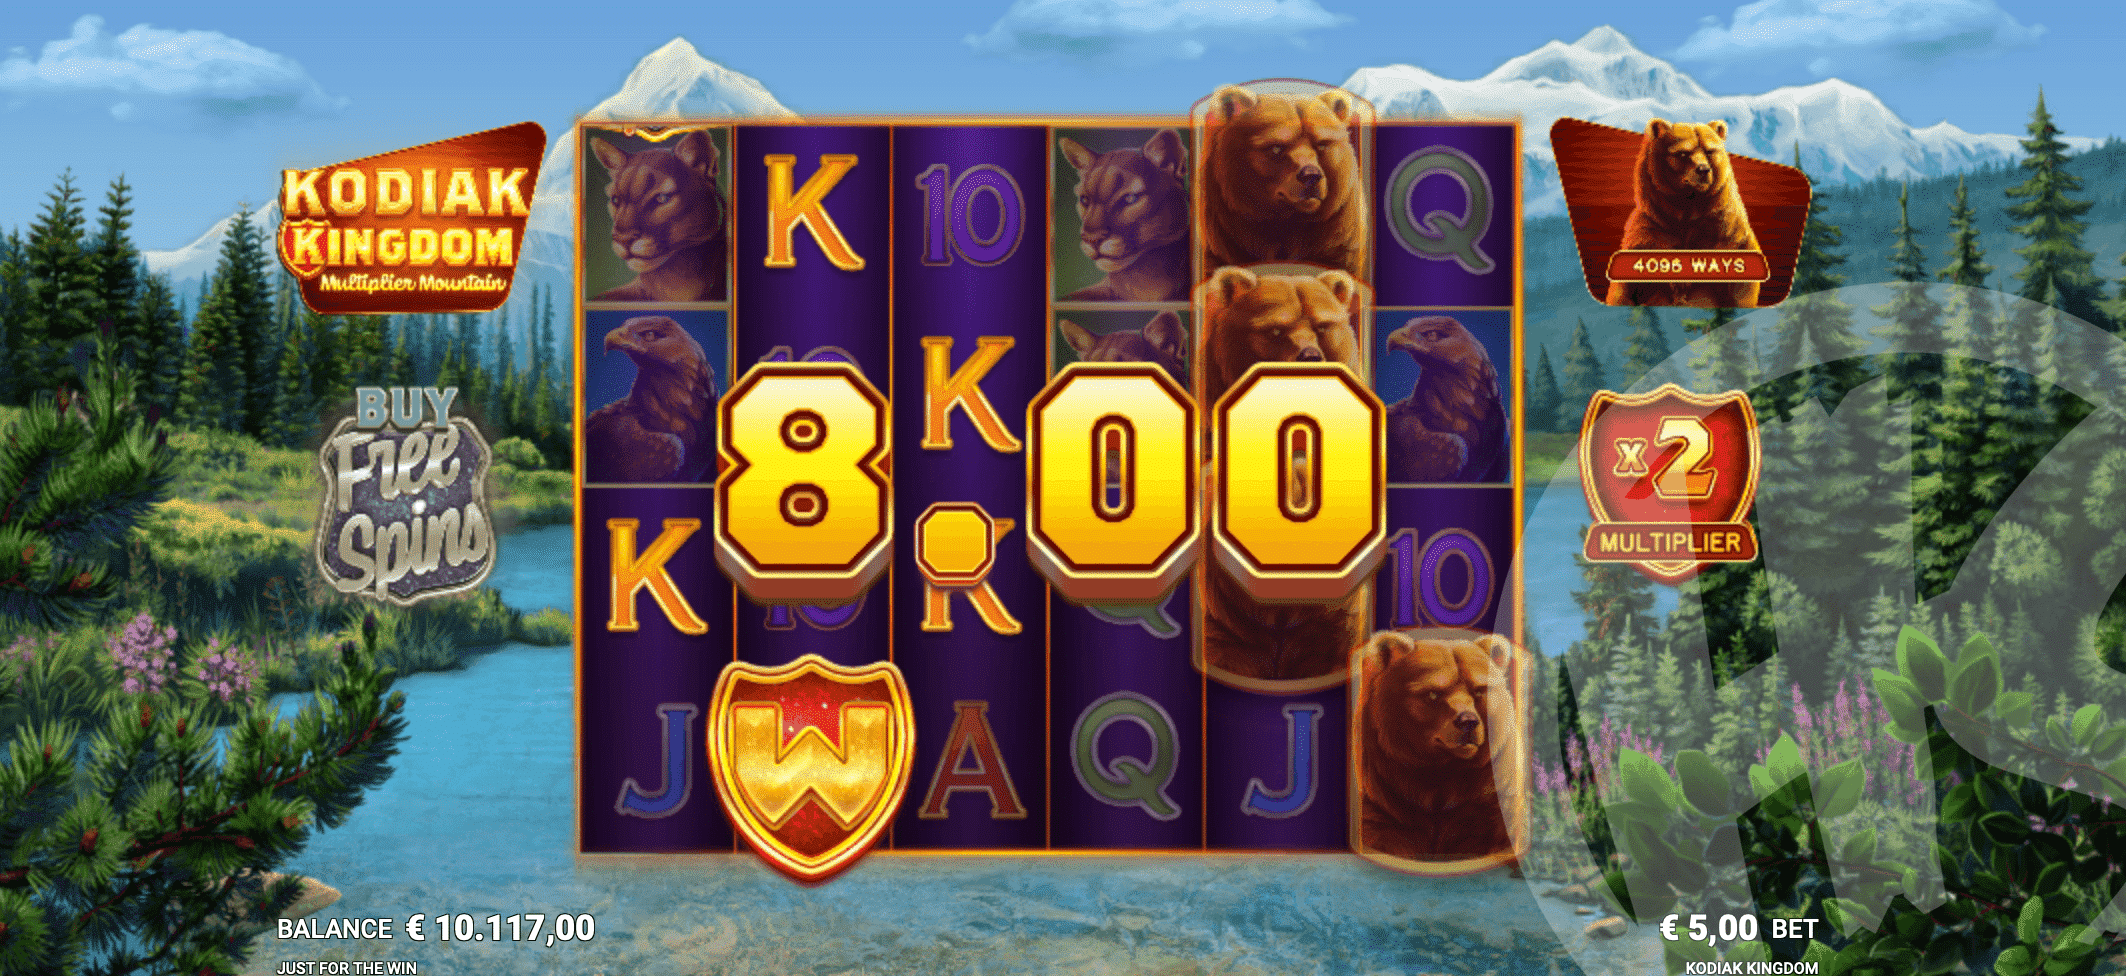 Kodiak Kingdom Slot Wins